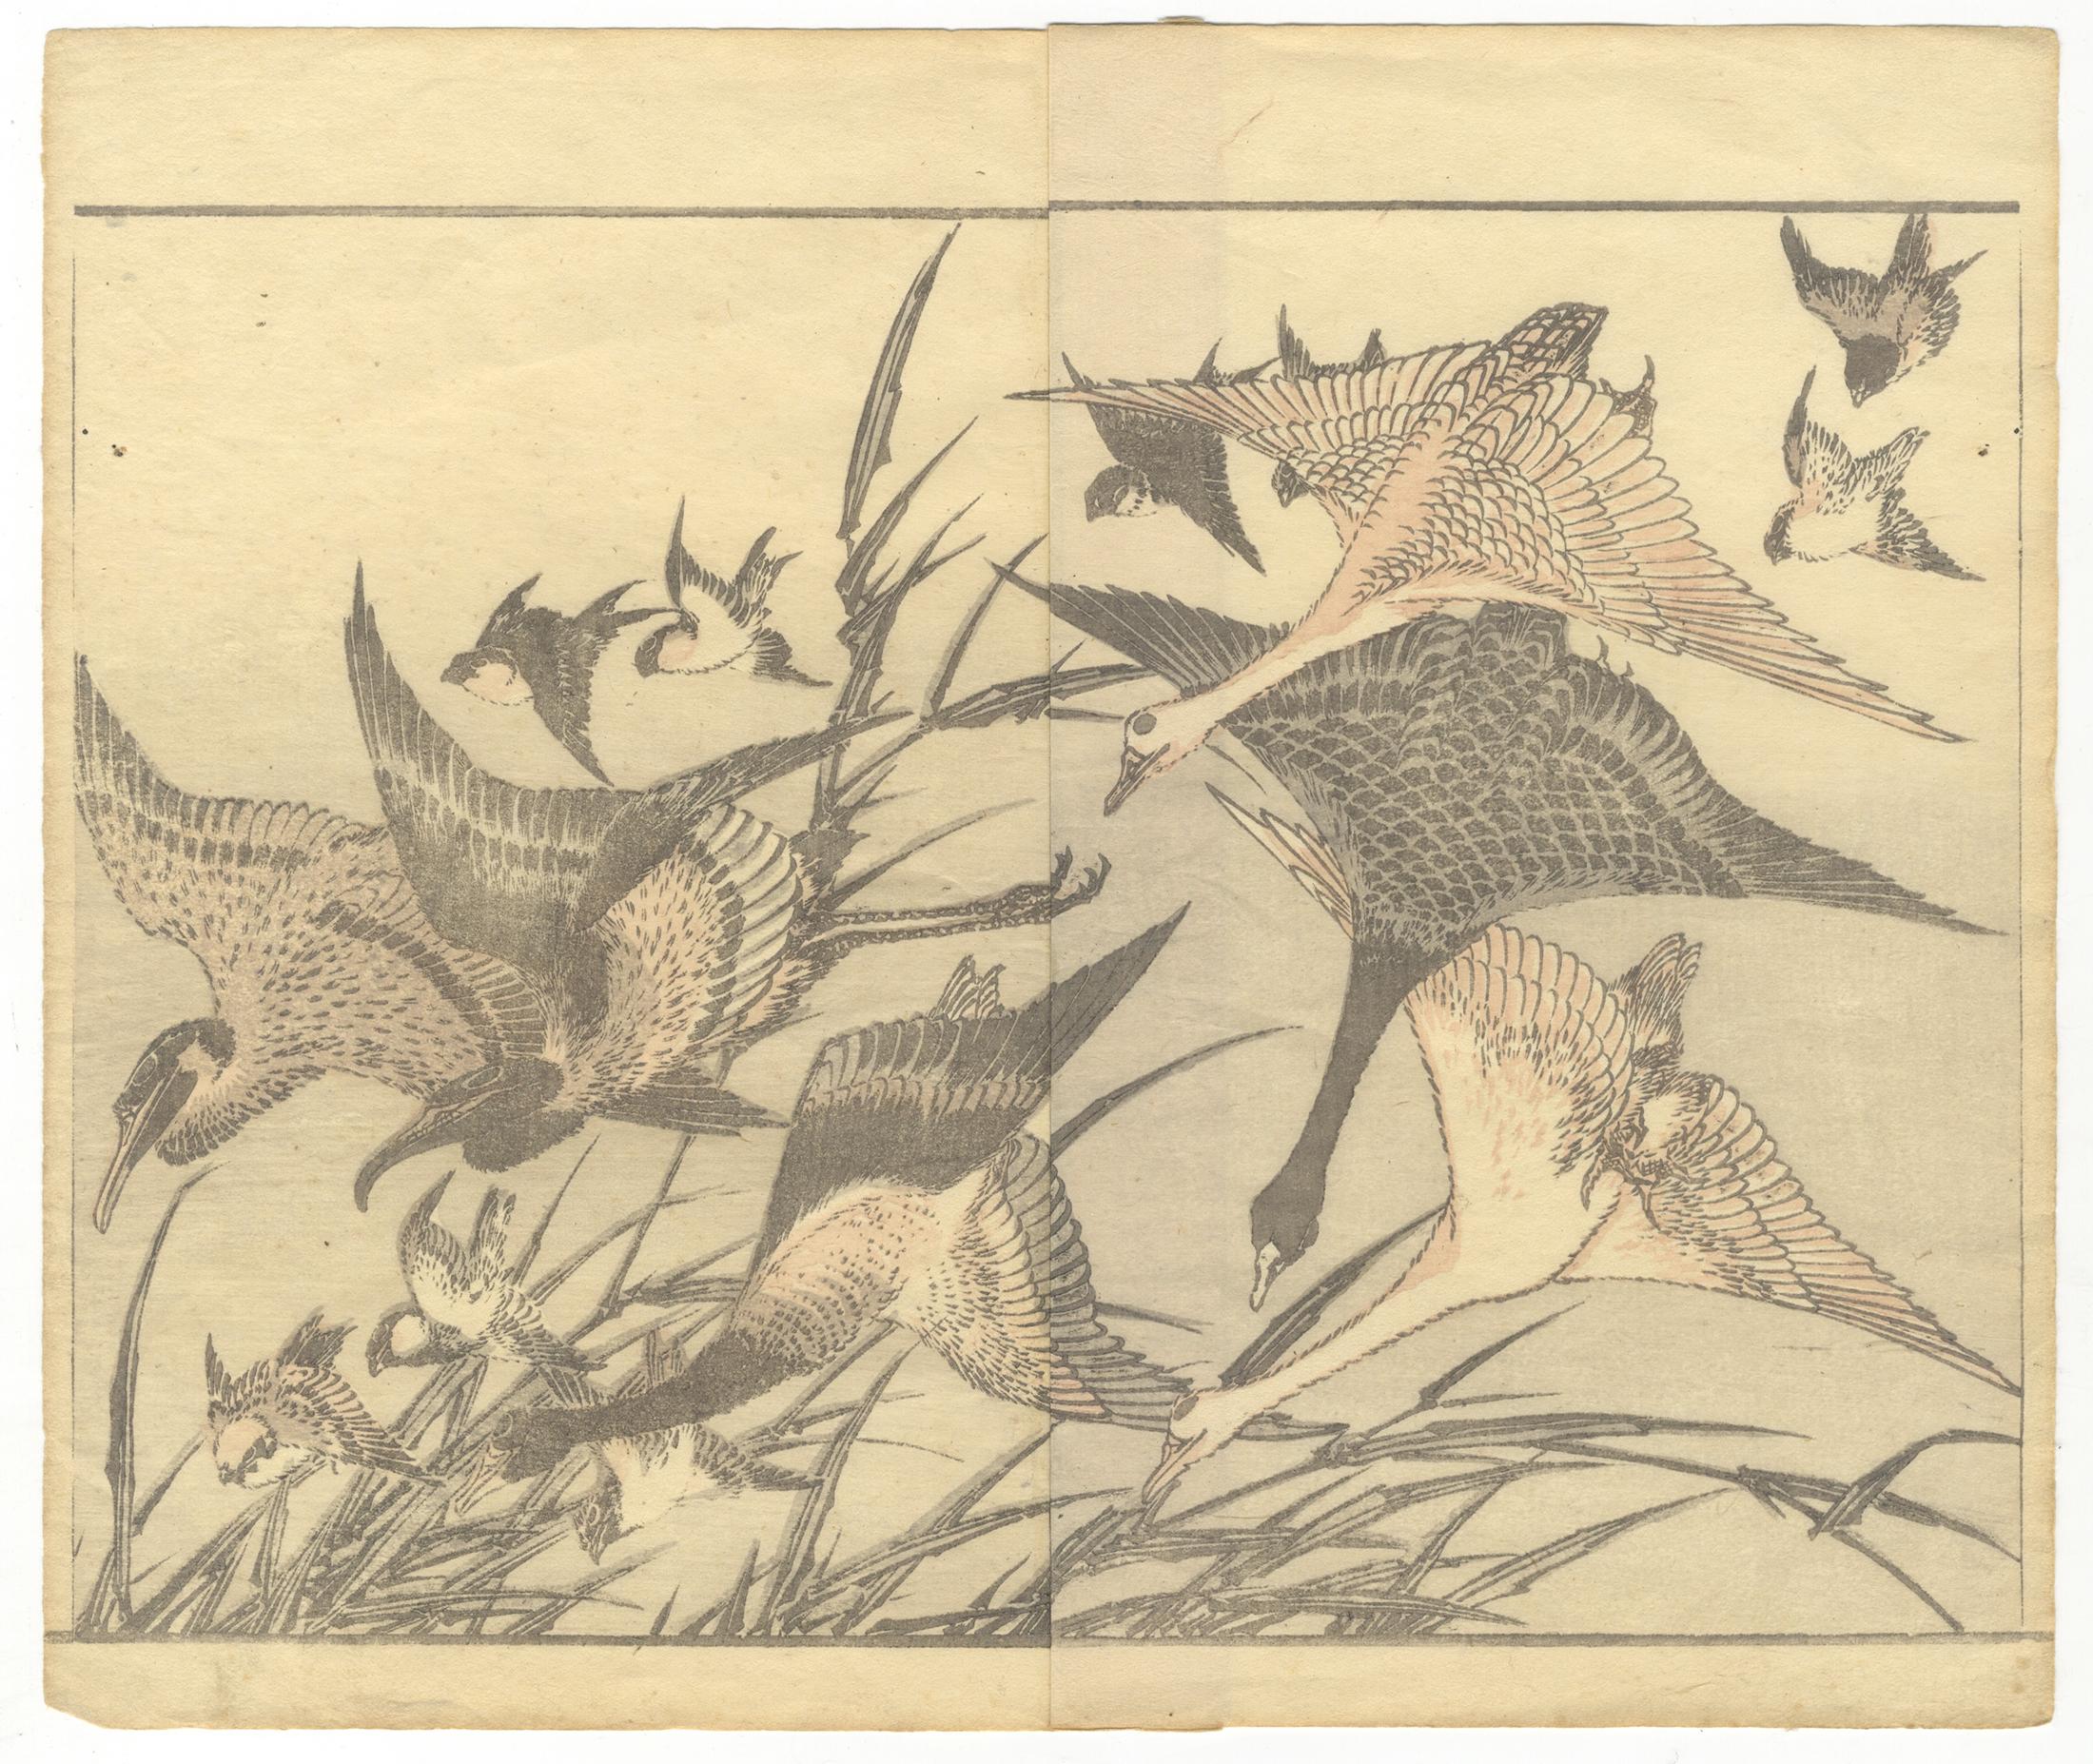 Katsushika Hokusai Portrait Print - Hokusai, Ukiyo-e, Japanese Woodblock Print, Manga, Geese, Bird and Flower, Edo